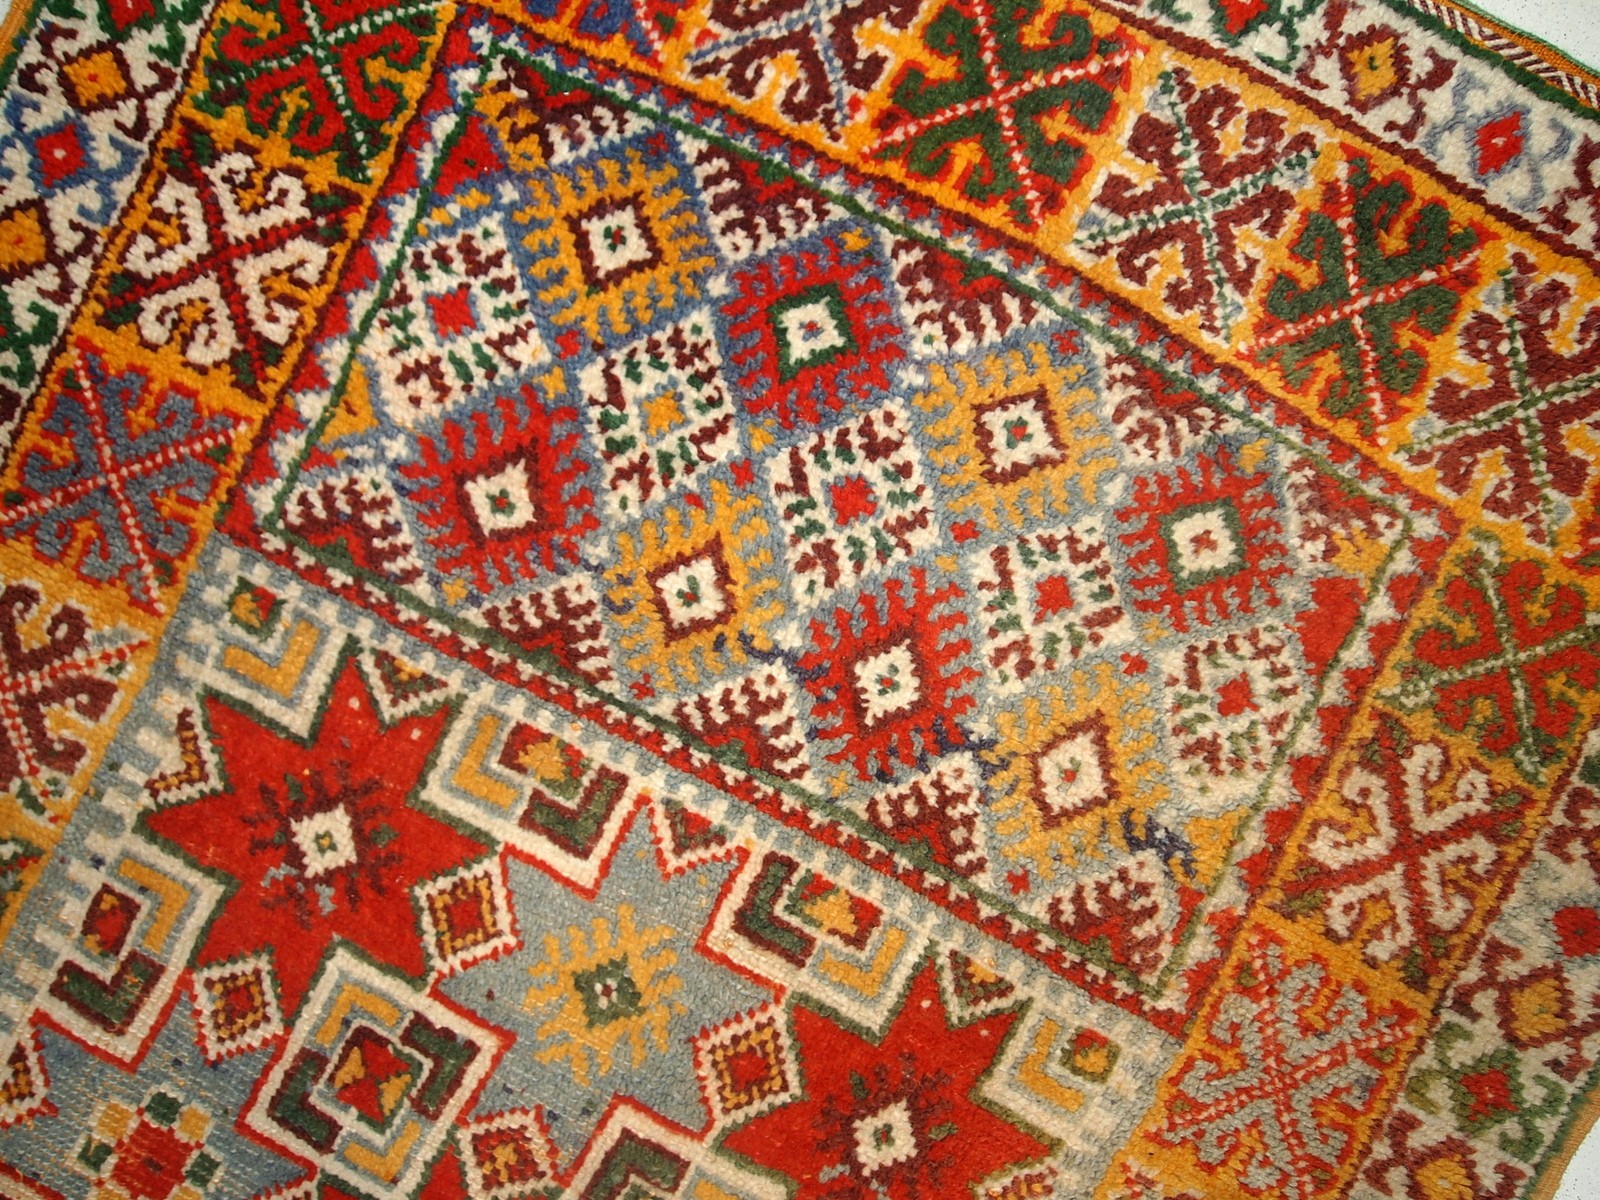 Handmade antique Moroccan Berber rug 3.2' x 5.5' (99cm x 168cm) 1900 - 1C292